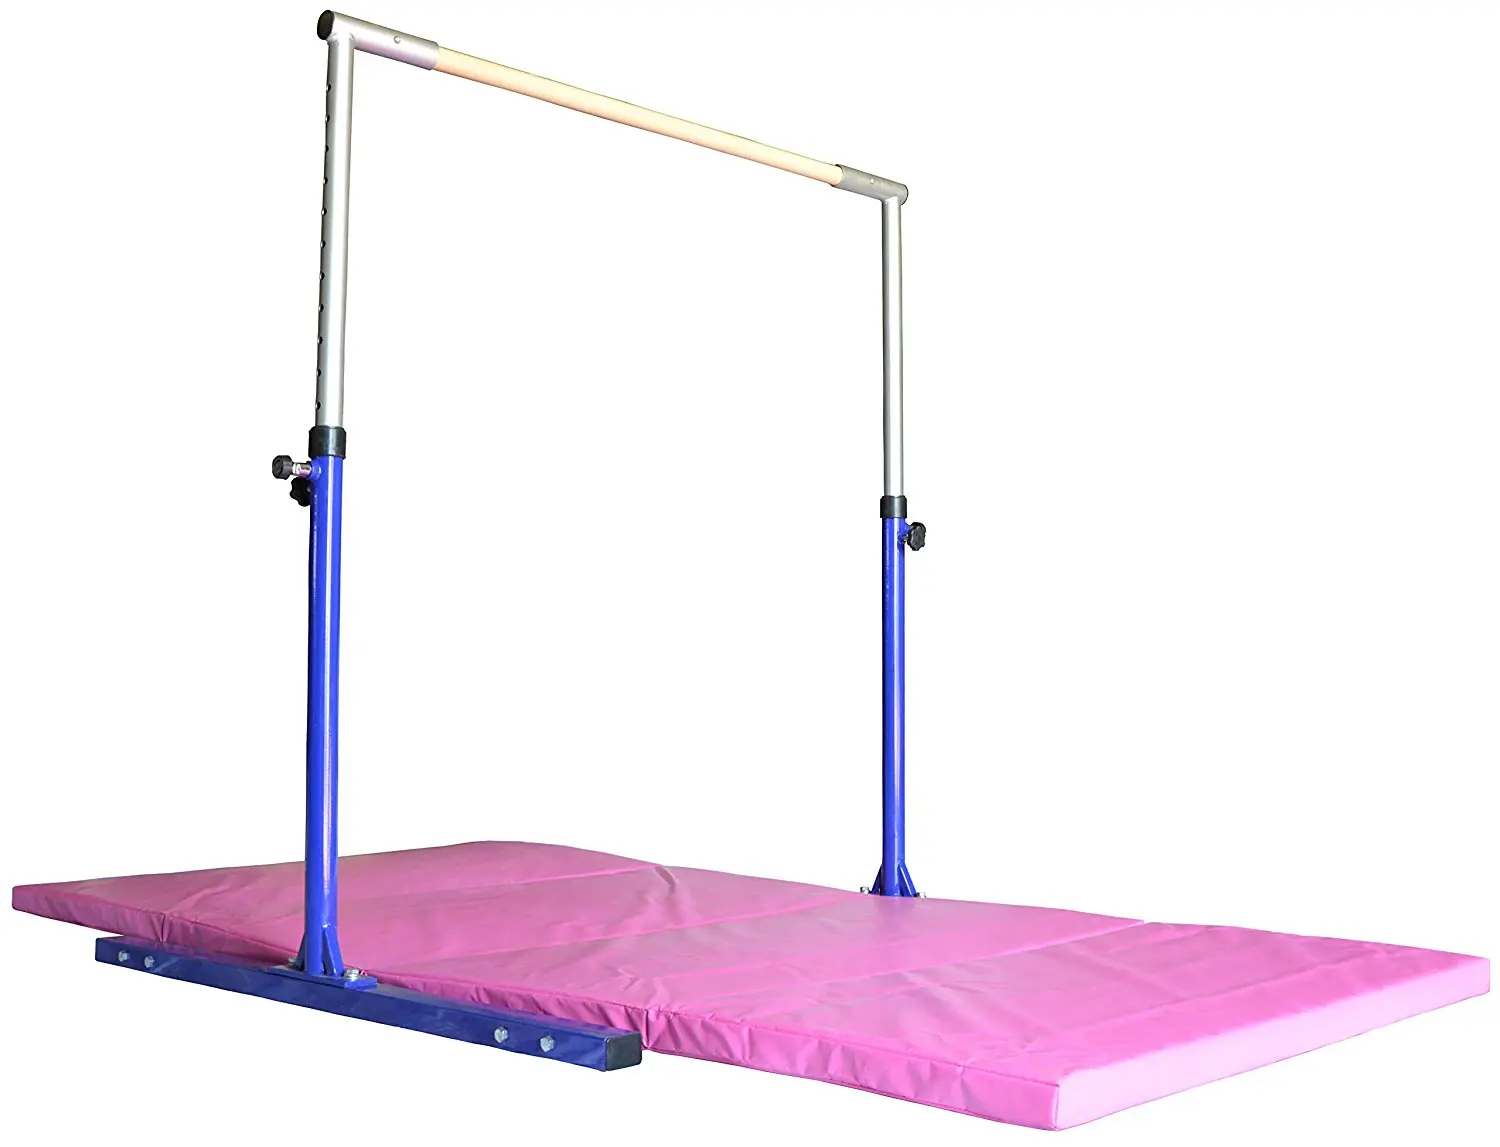 CHENTUO Expandable Gymnastics Bars for Kids Adjustable Height Gymnastic Horizontal Bars Folding Junior Chirld Practice Bar Training Kip Bar Equipment for Home/Floor/Practice/Gymnastics 